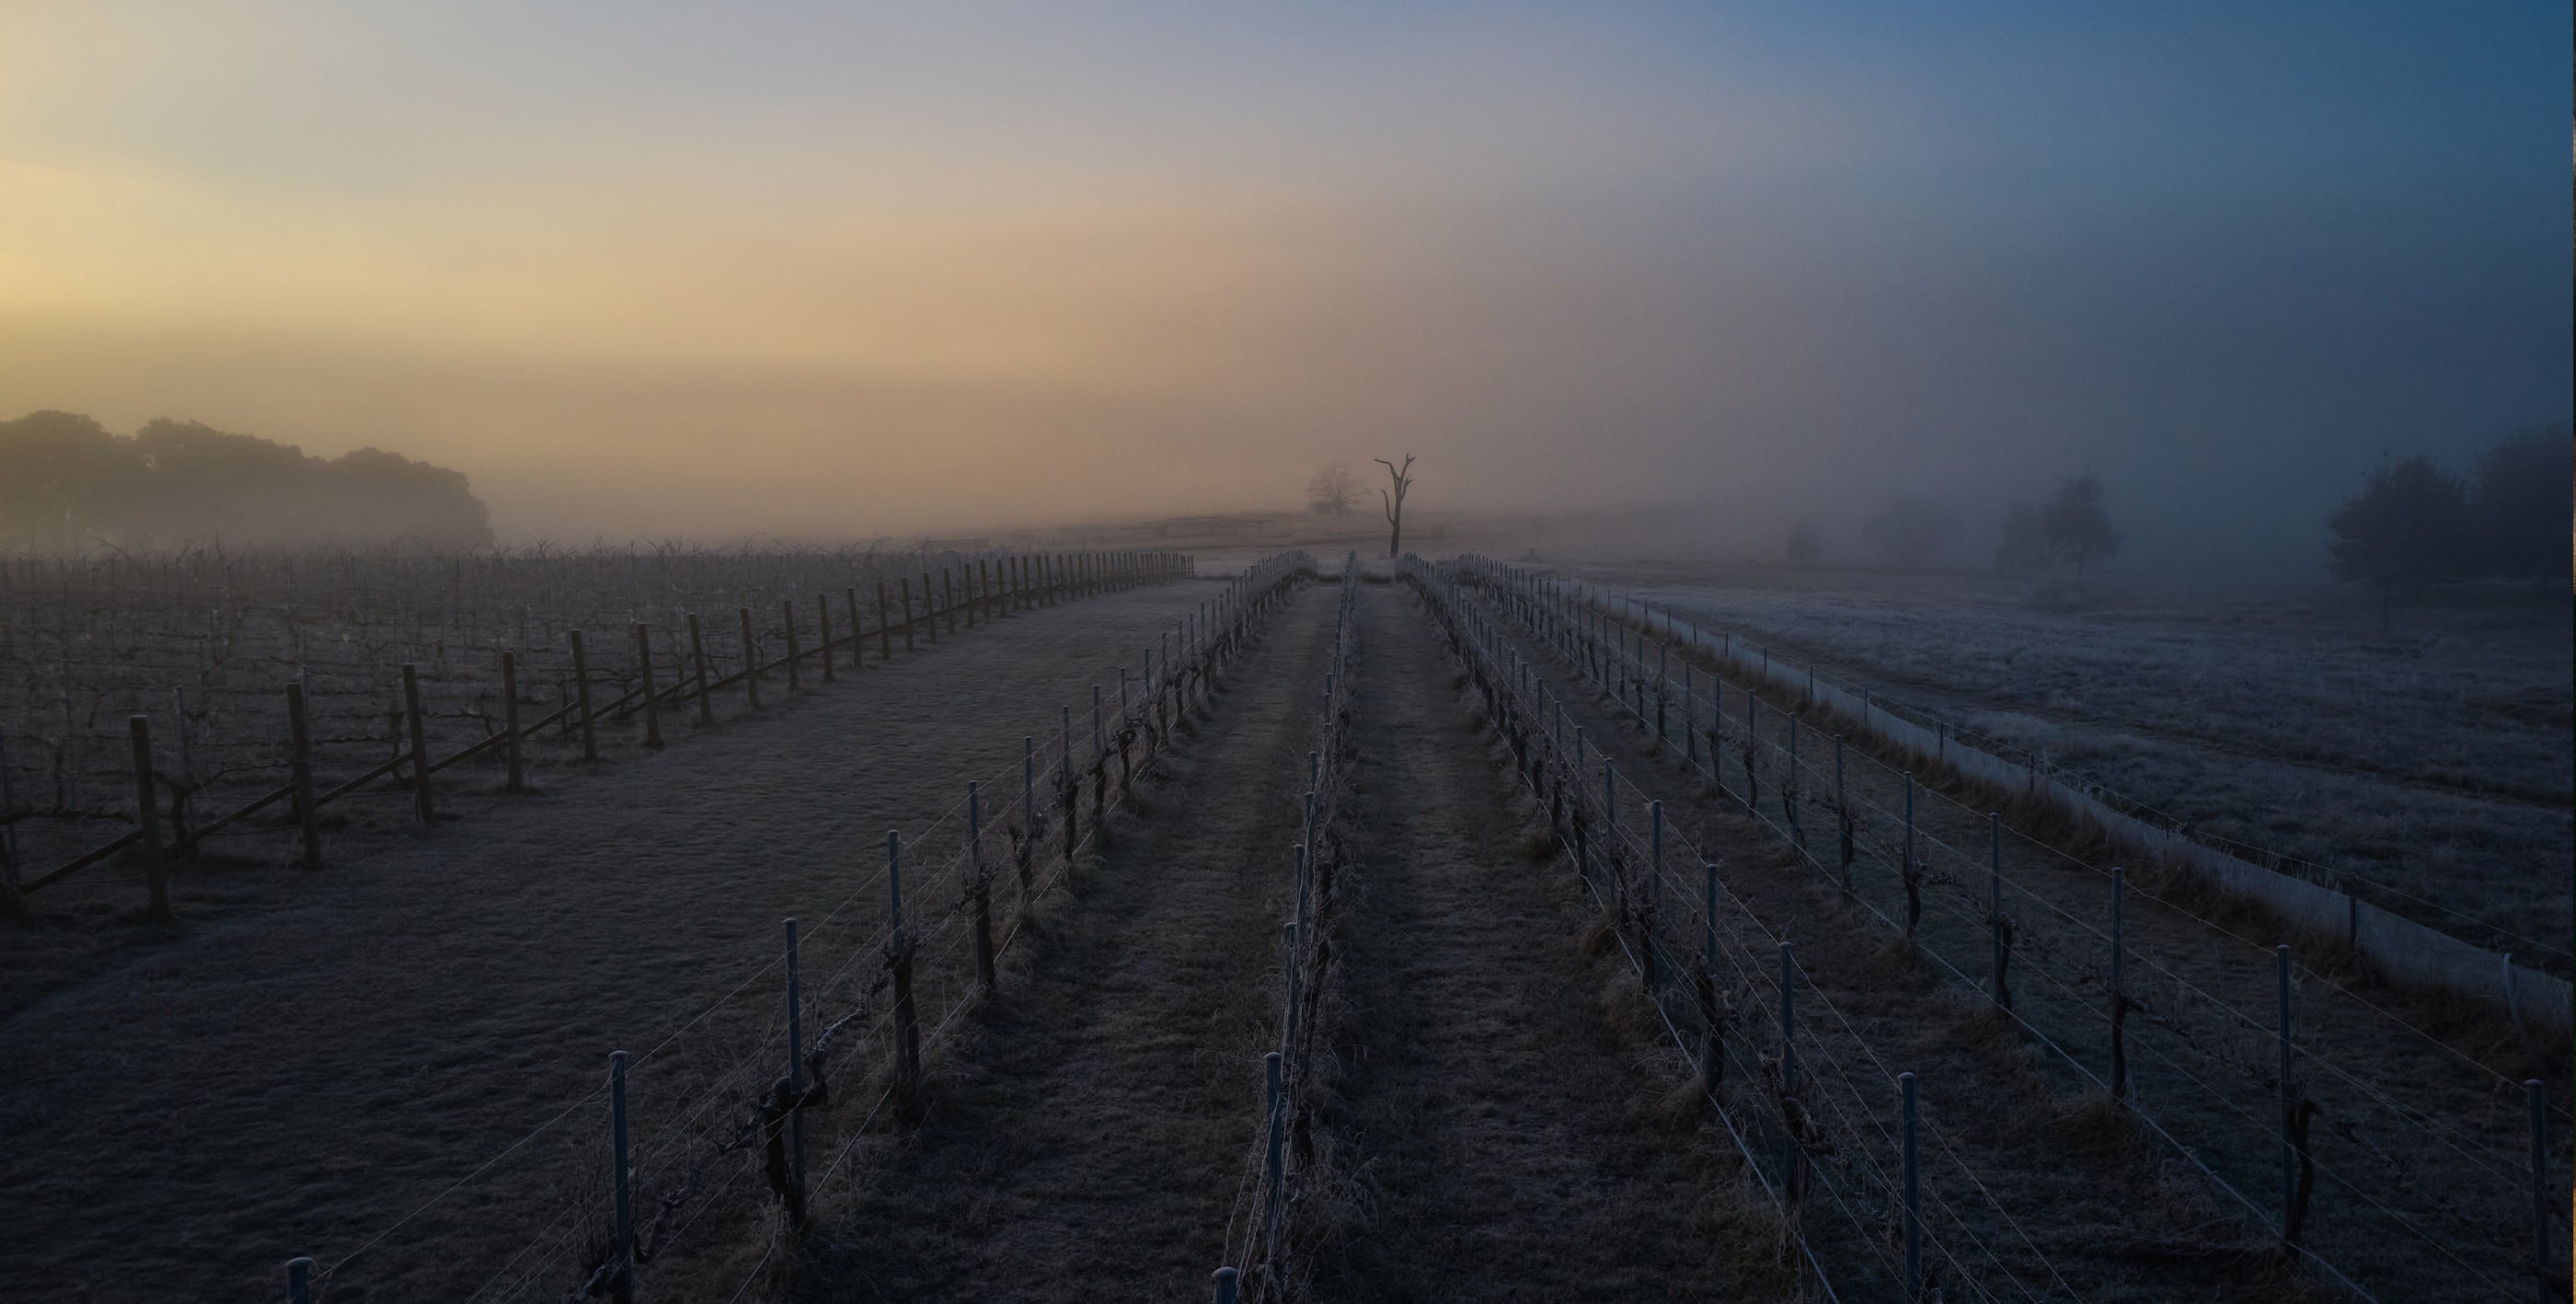 Frosty eastern vineyard before dawn